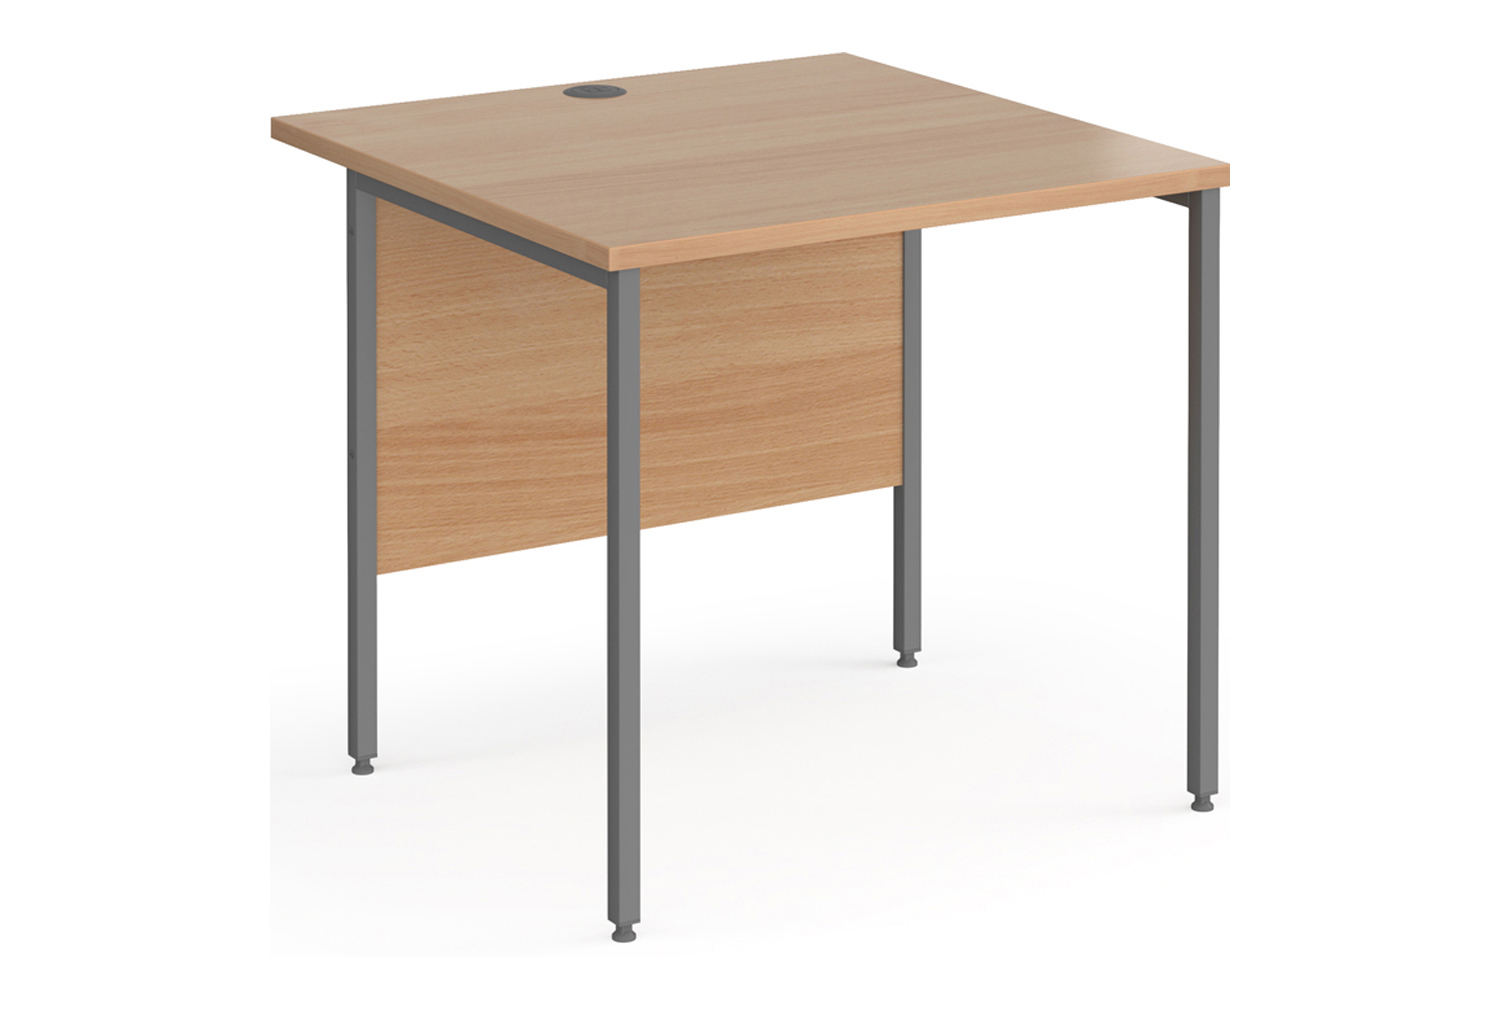 Value Line Classic+ Rectangular H-Leg Office Desk (Graphite Leg), 80wx80dx73h (cm), Beech, Express Delivery